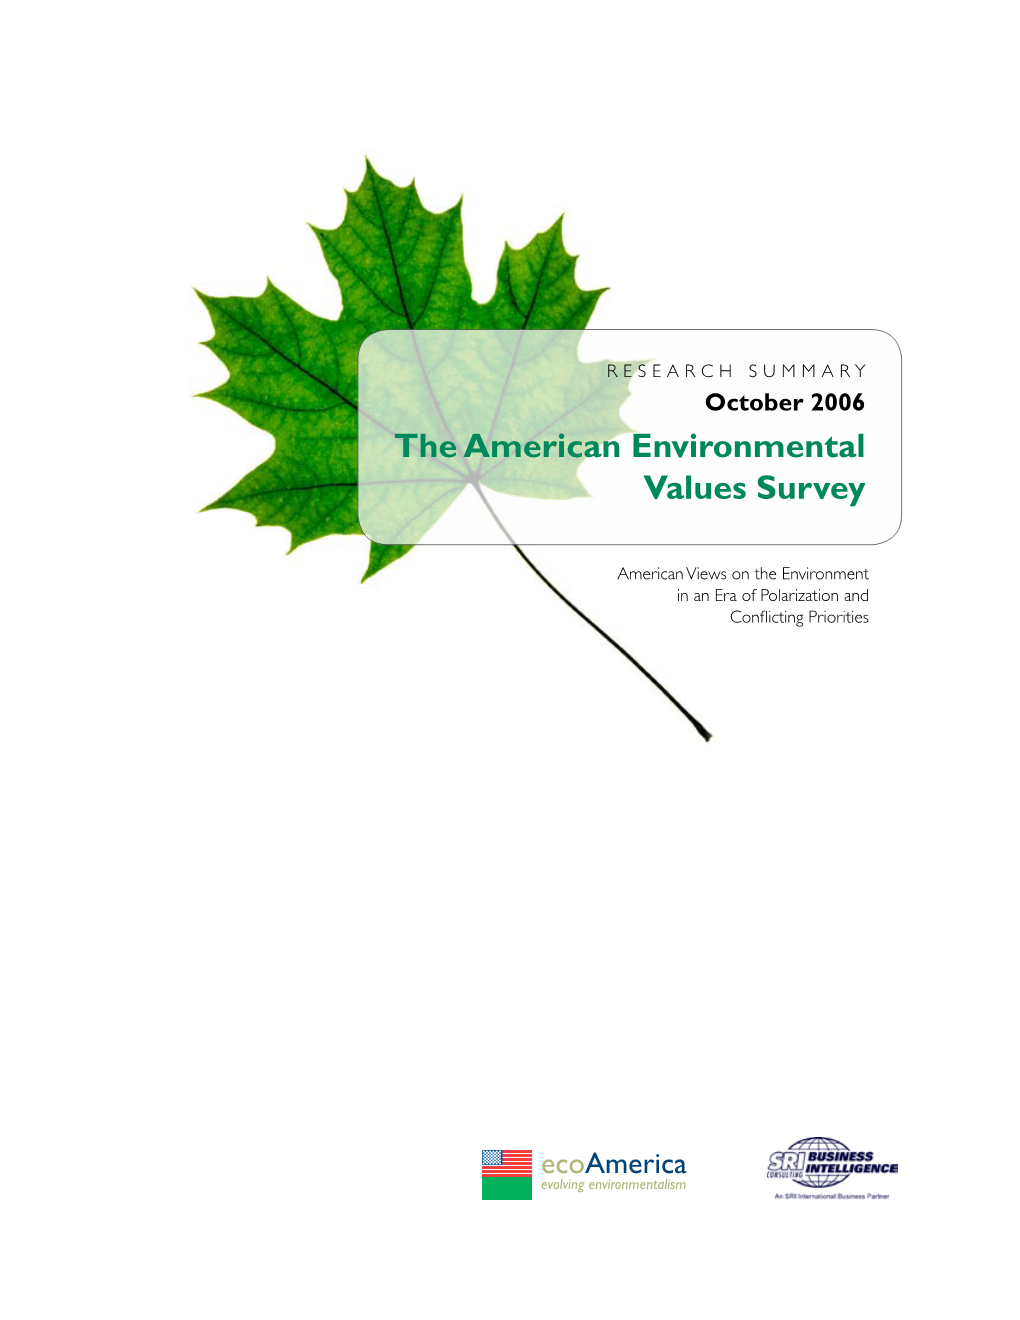 The American Environmental Values Survey